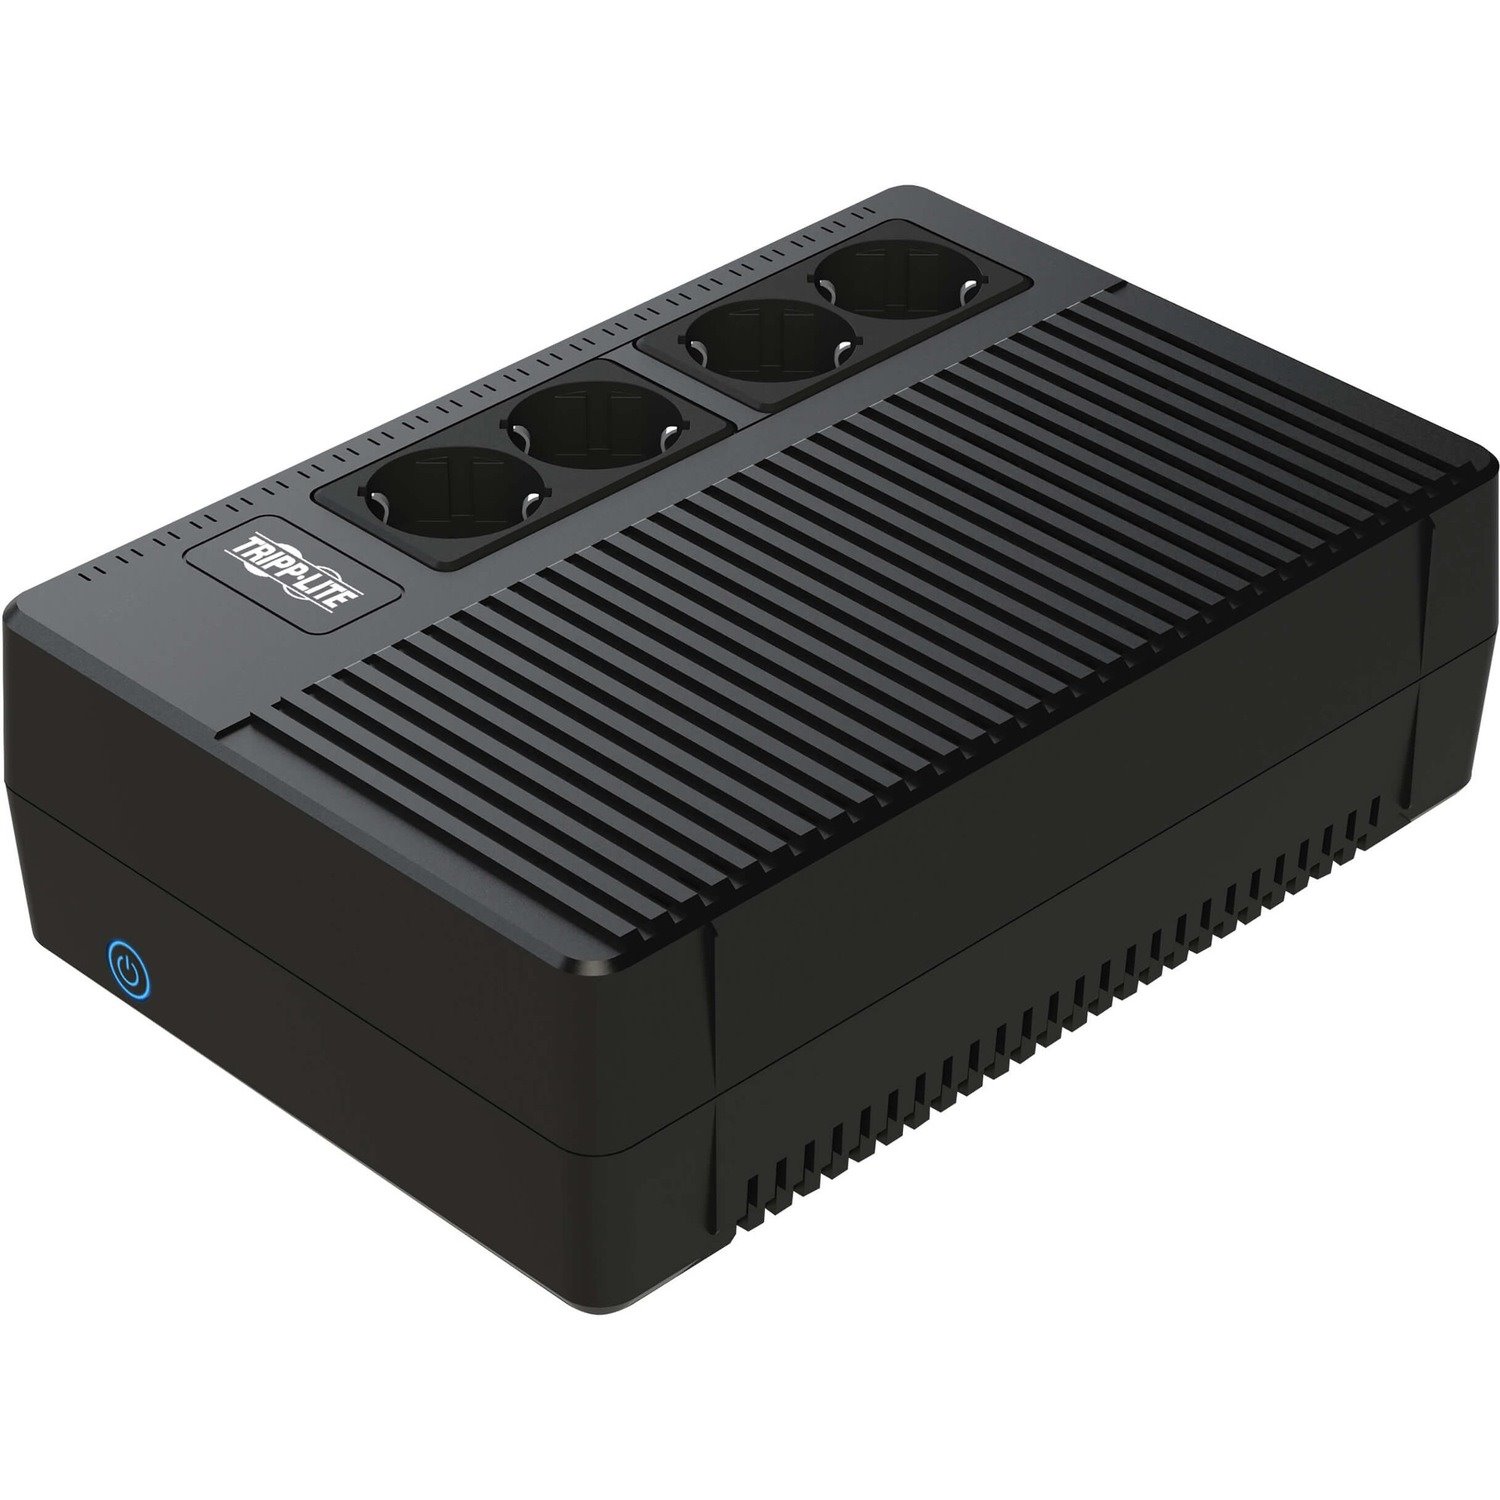 Tripp Lite 230V 800VA 450W Ultra-Compact Line-Interactive UPS - 4 Schuko Outlets, Desktop/Wall-Mount